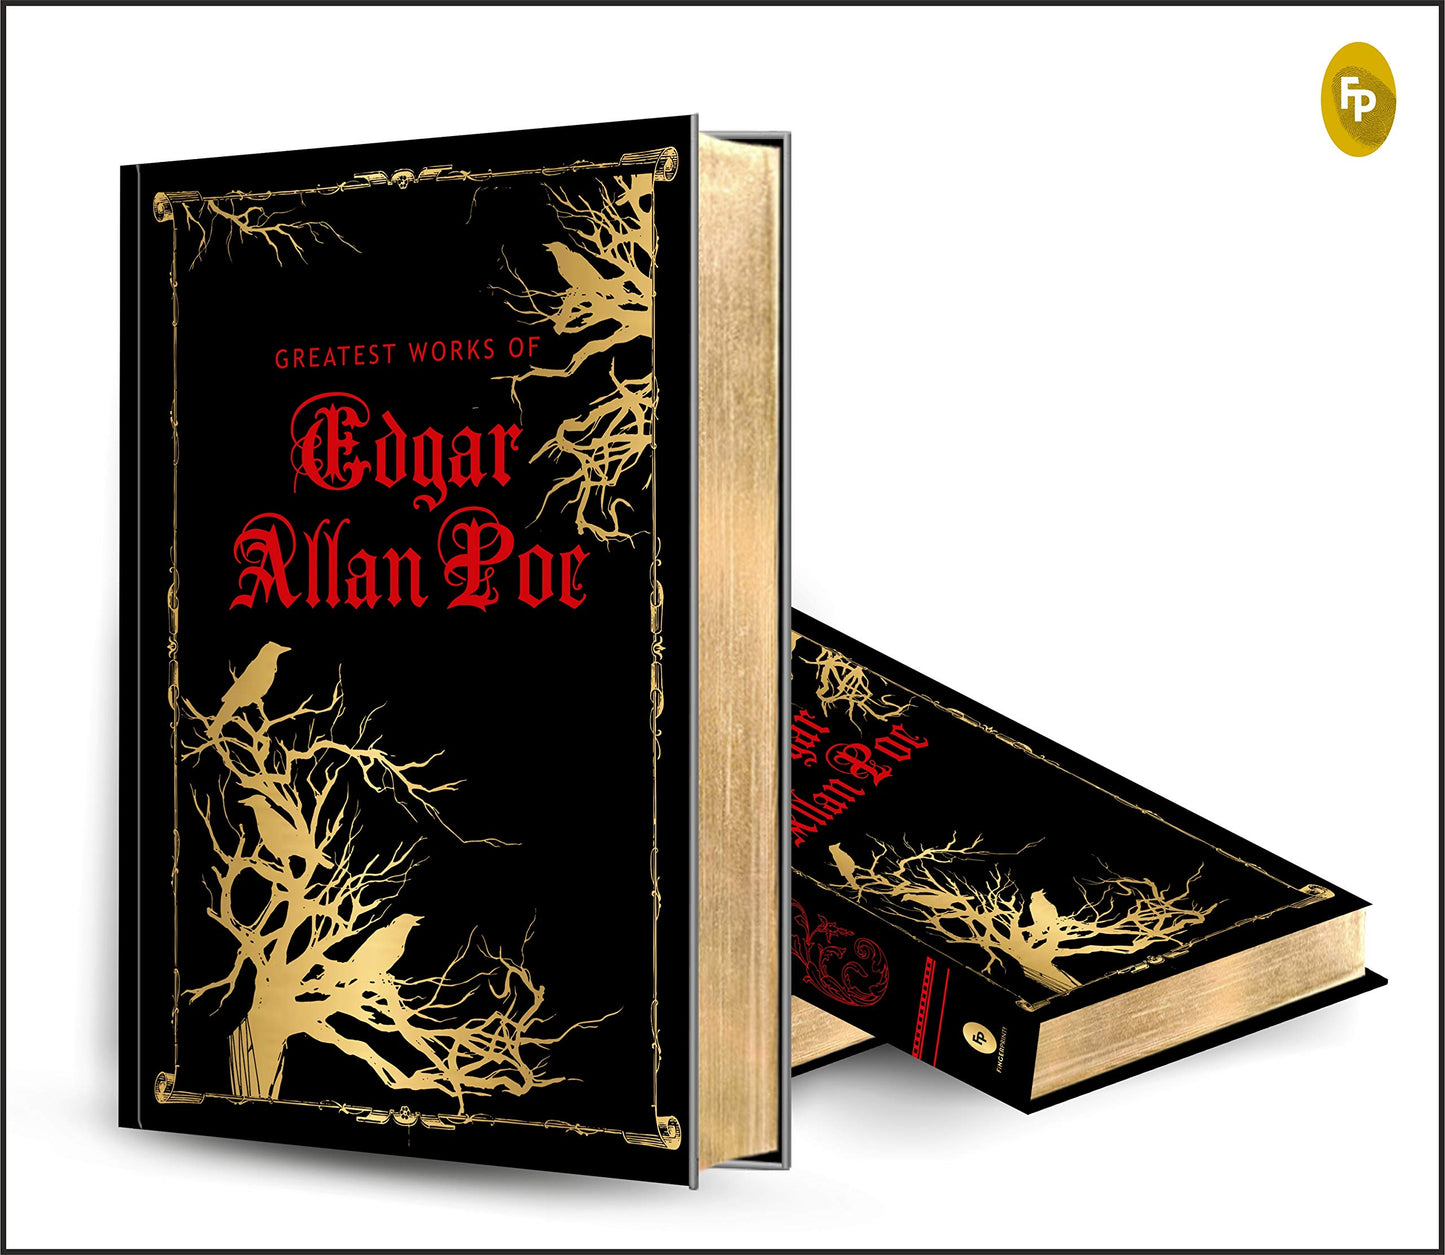 Greatest Works of Edgar Allan Poe